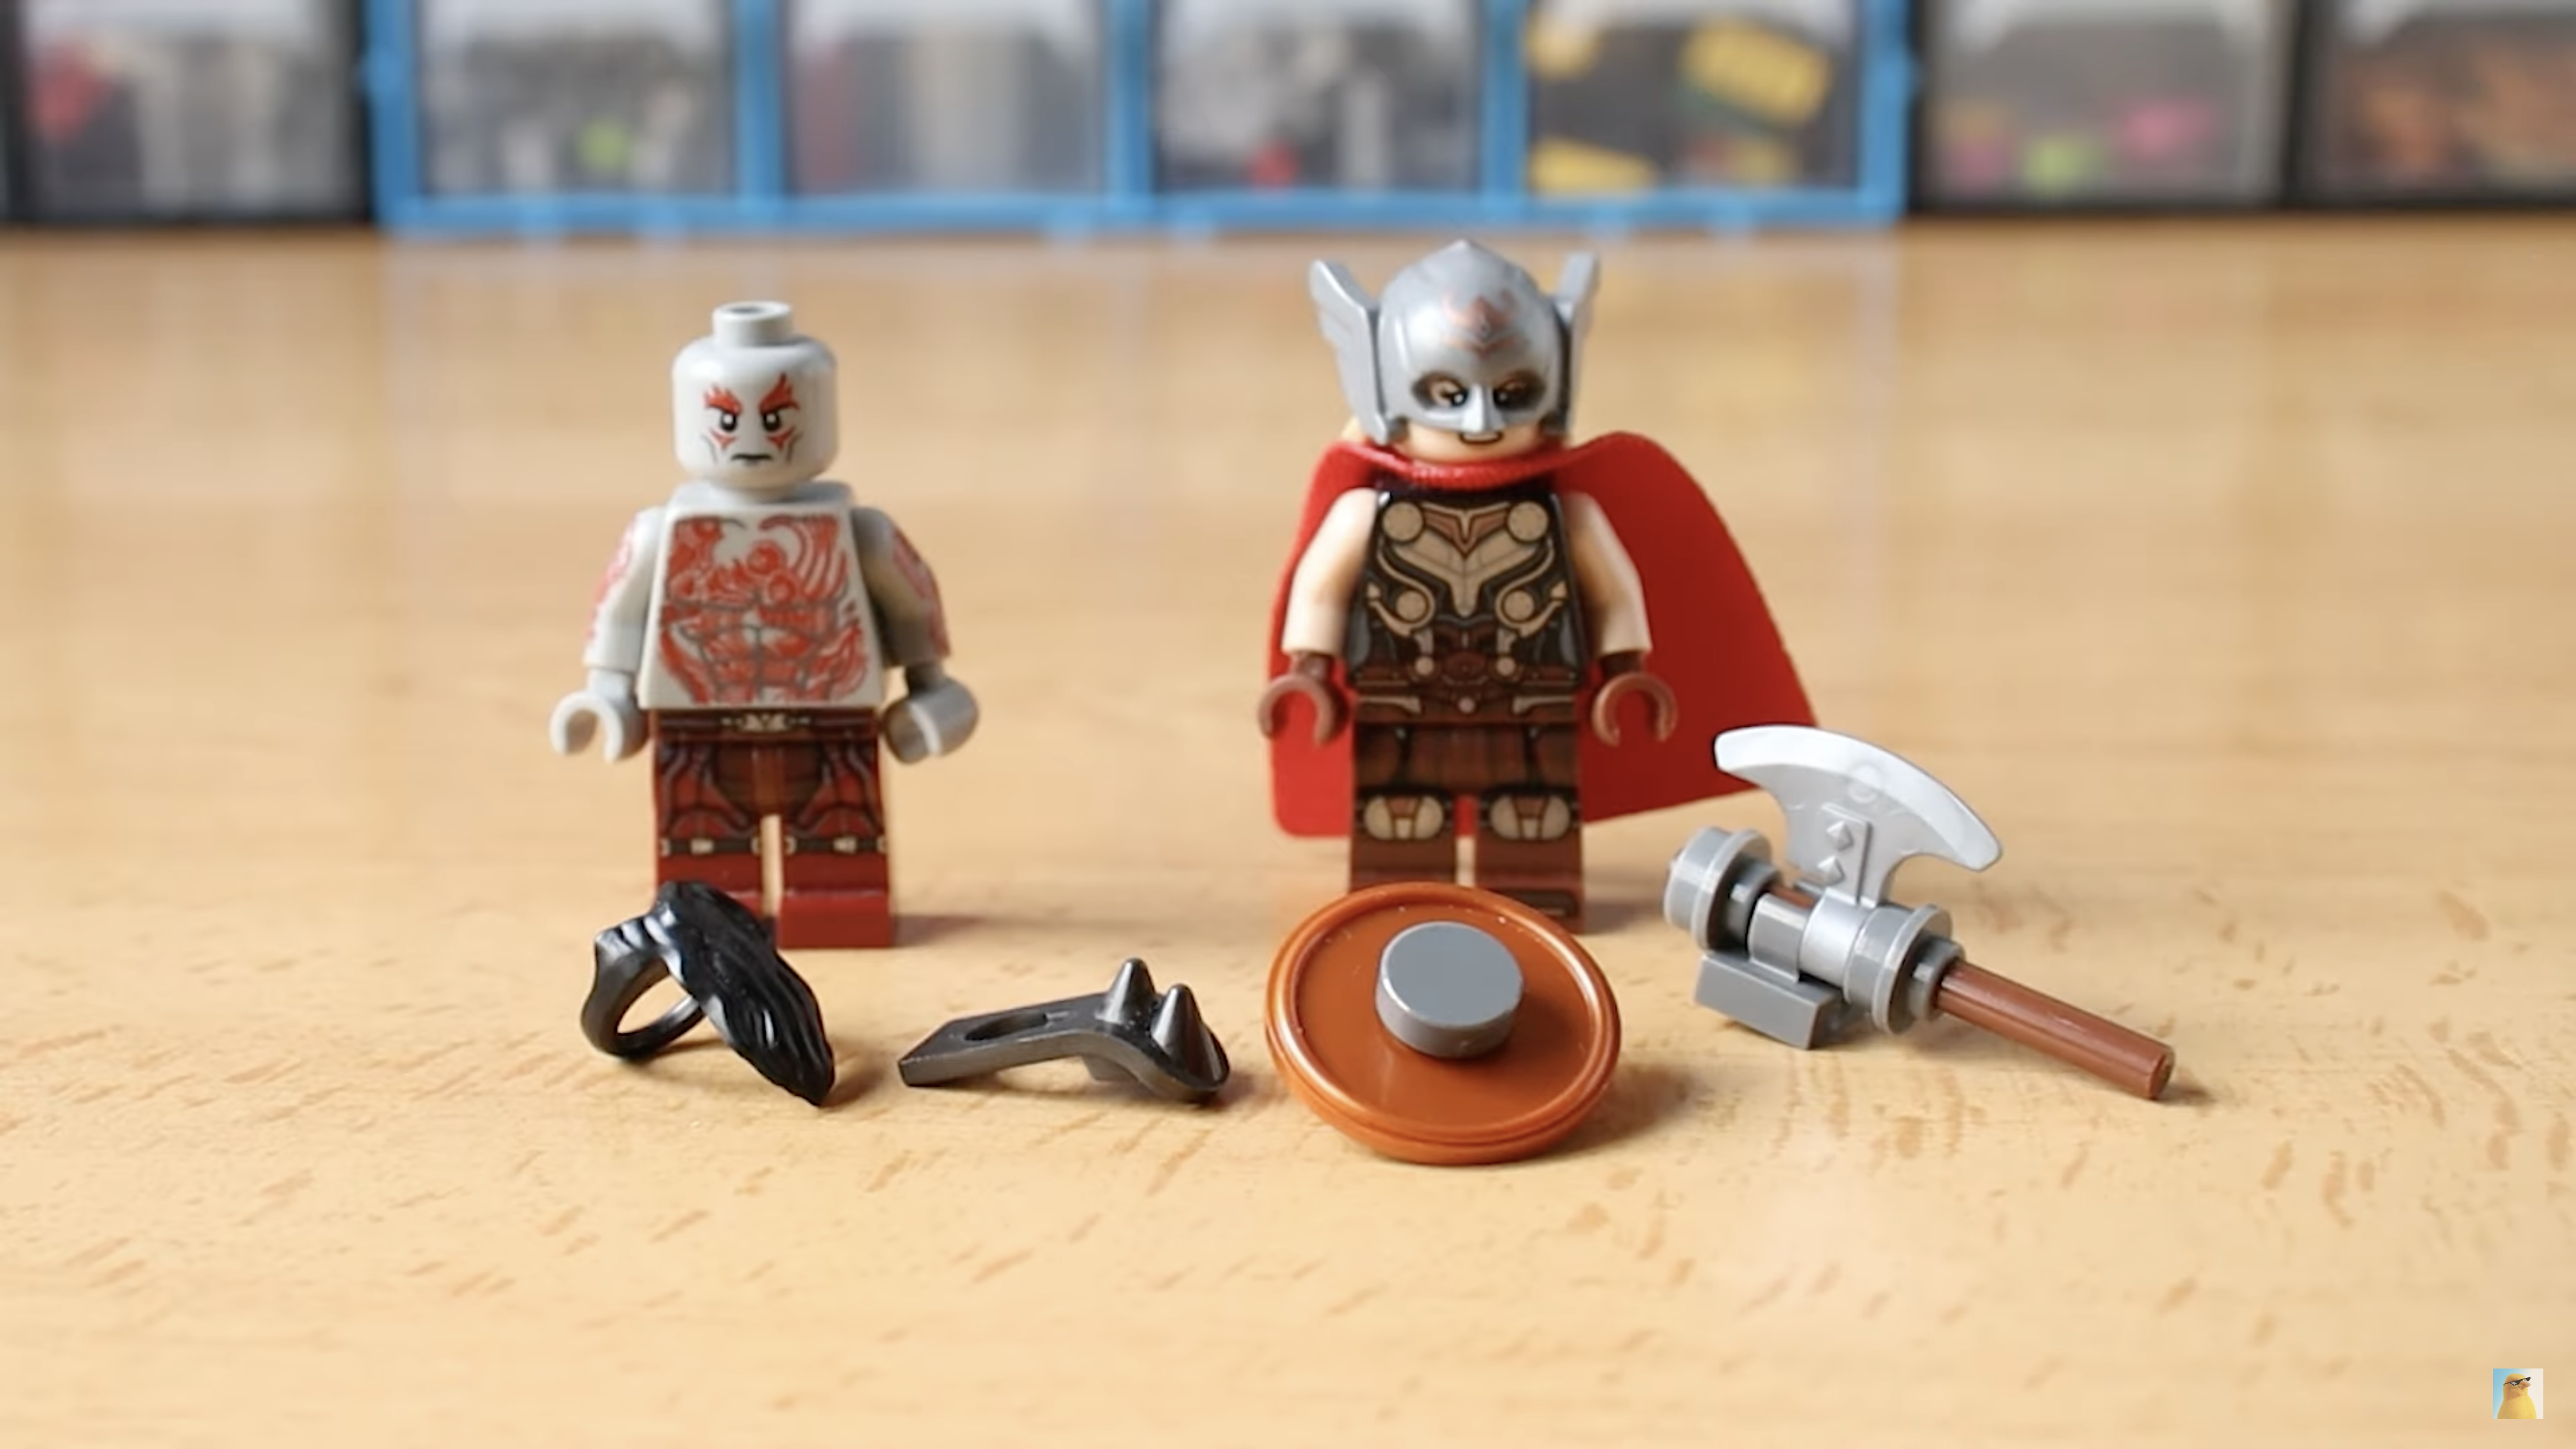 Epic LEGO God of War Ragnarök build pits Kratos against Thor